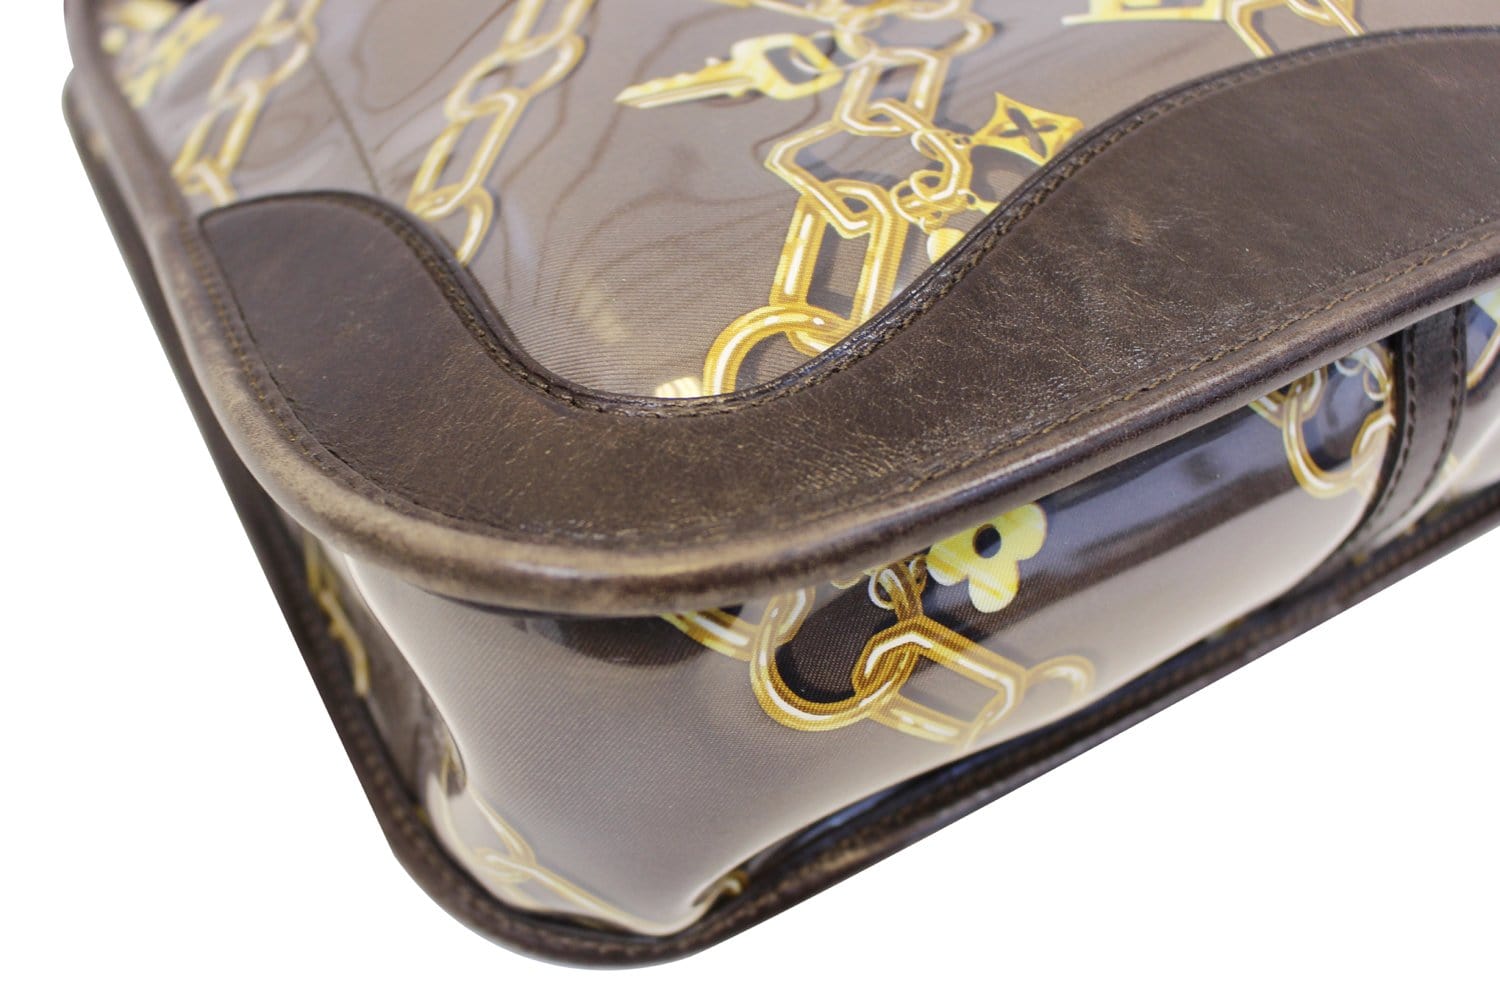 Louis Vuitton Musette Handbag 355424